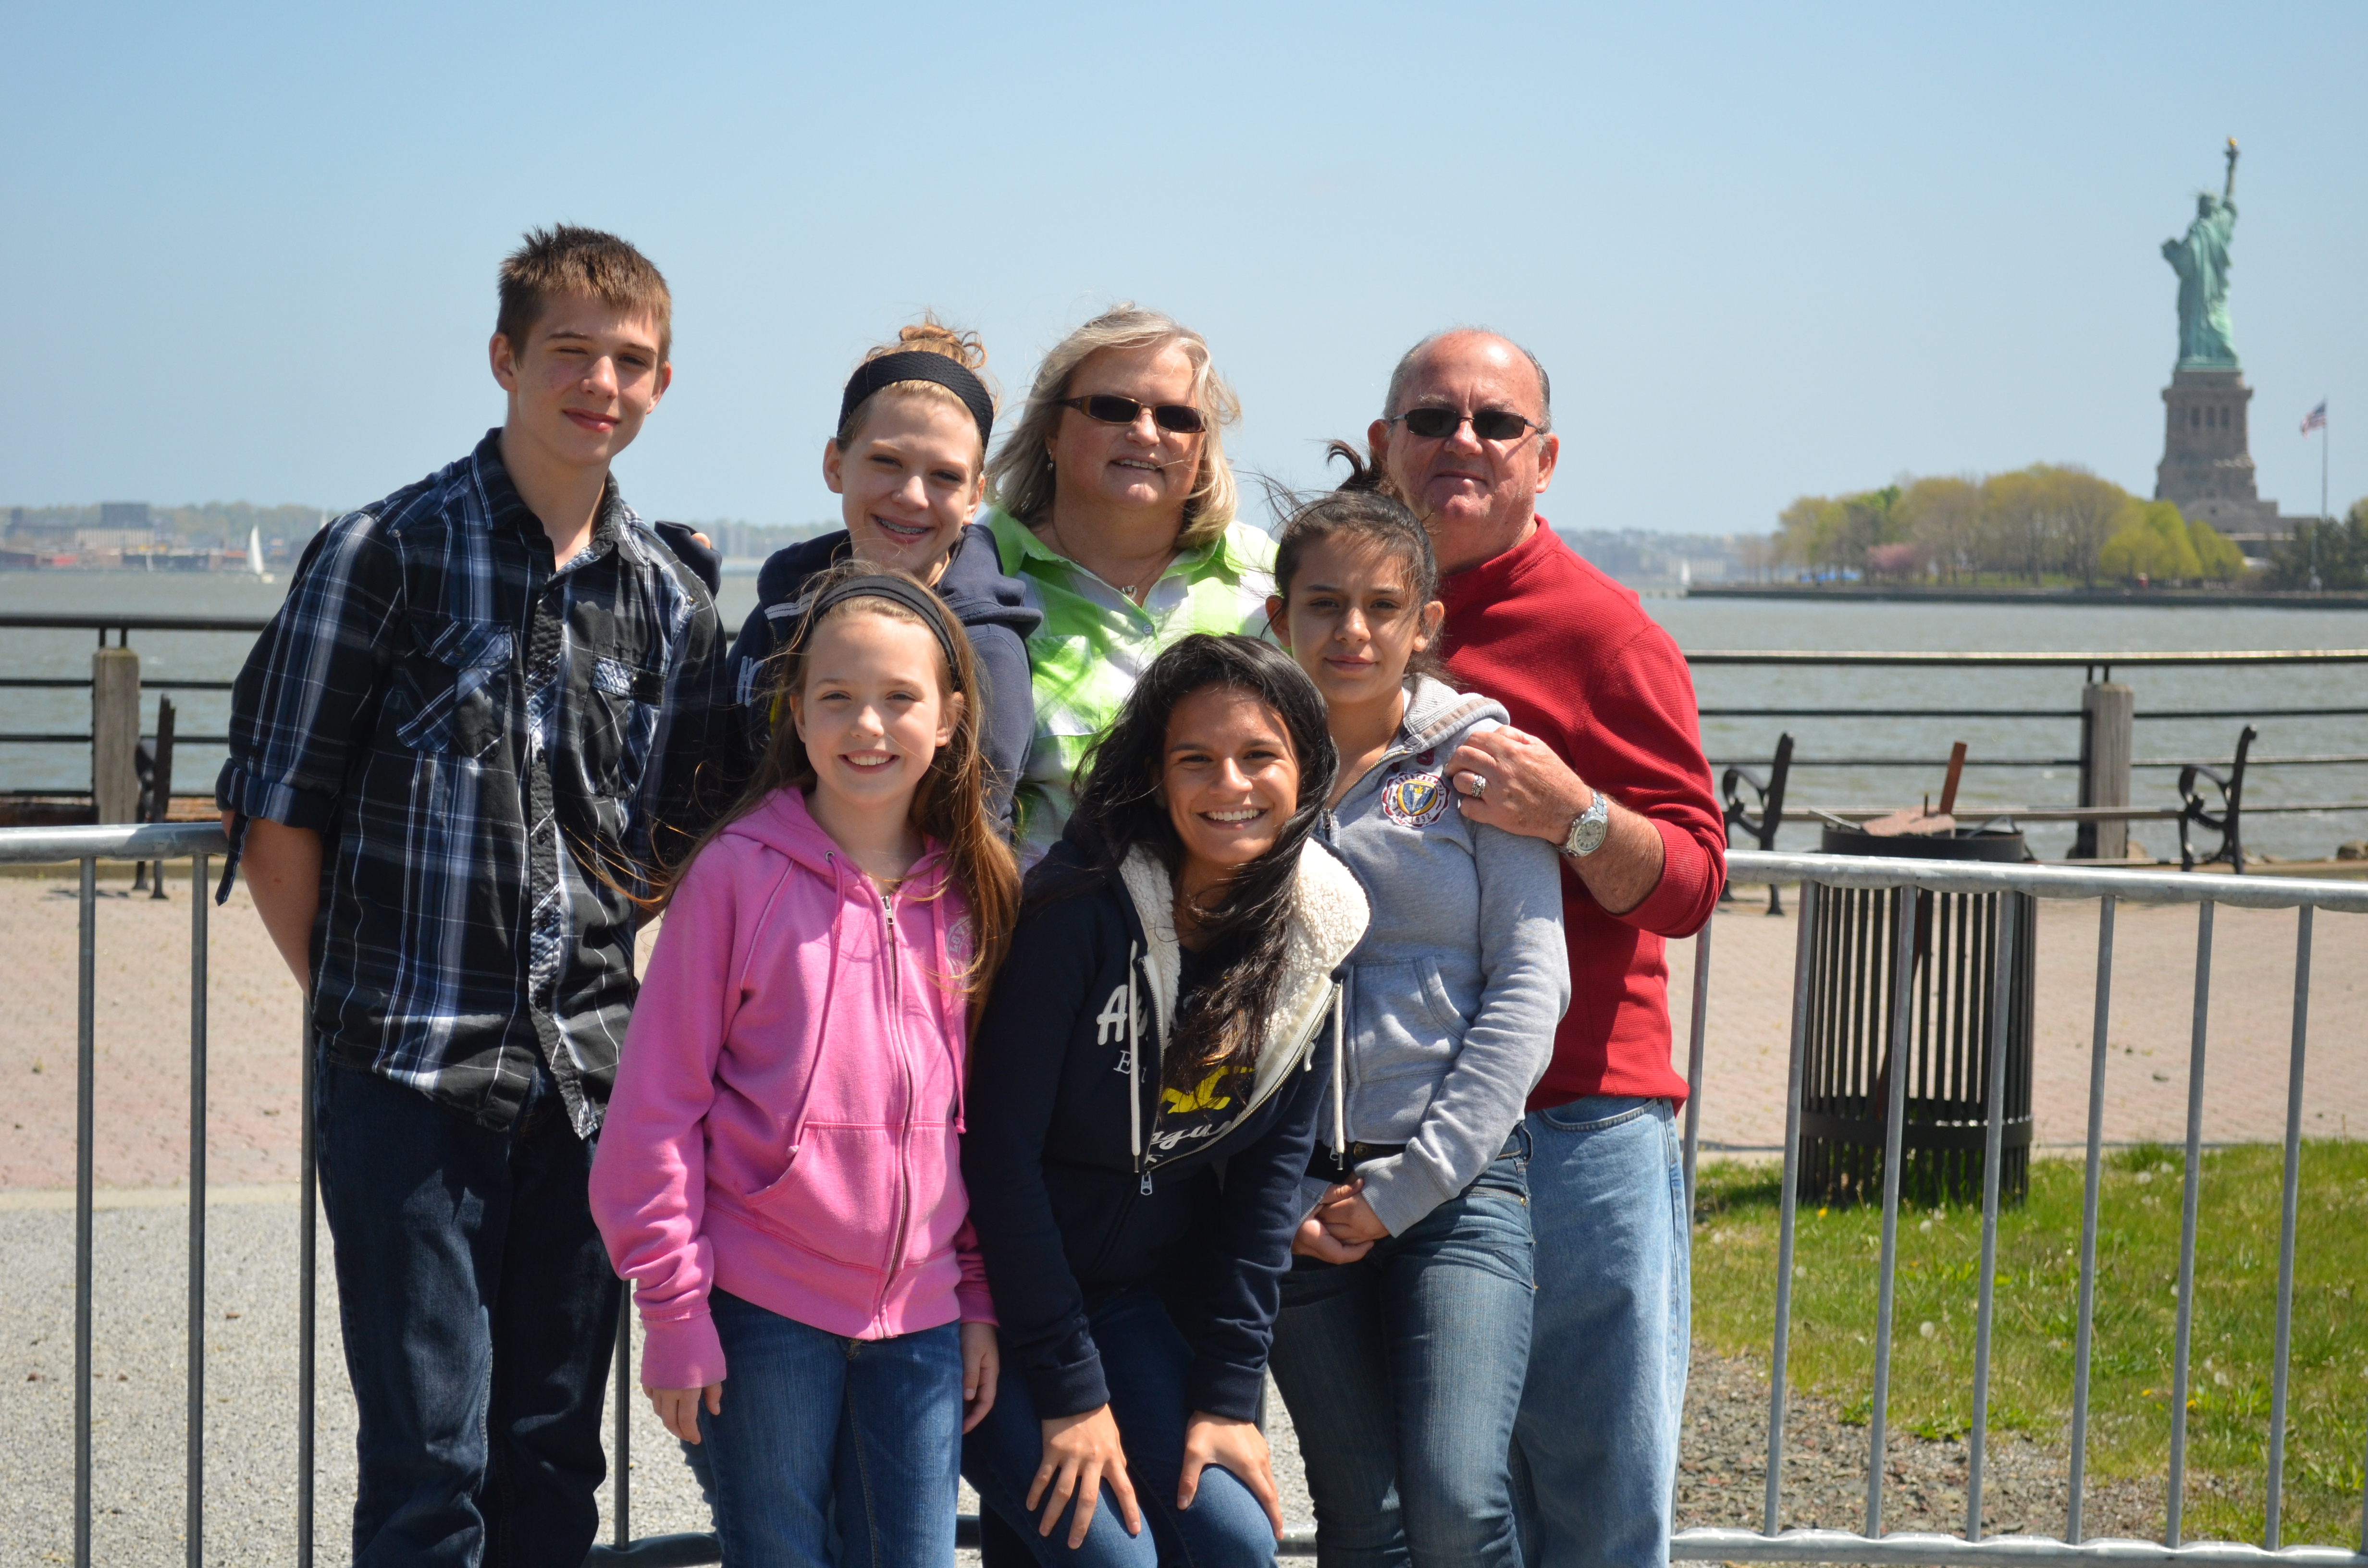 vonnie nealon with her family near liberty island in new york